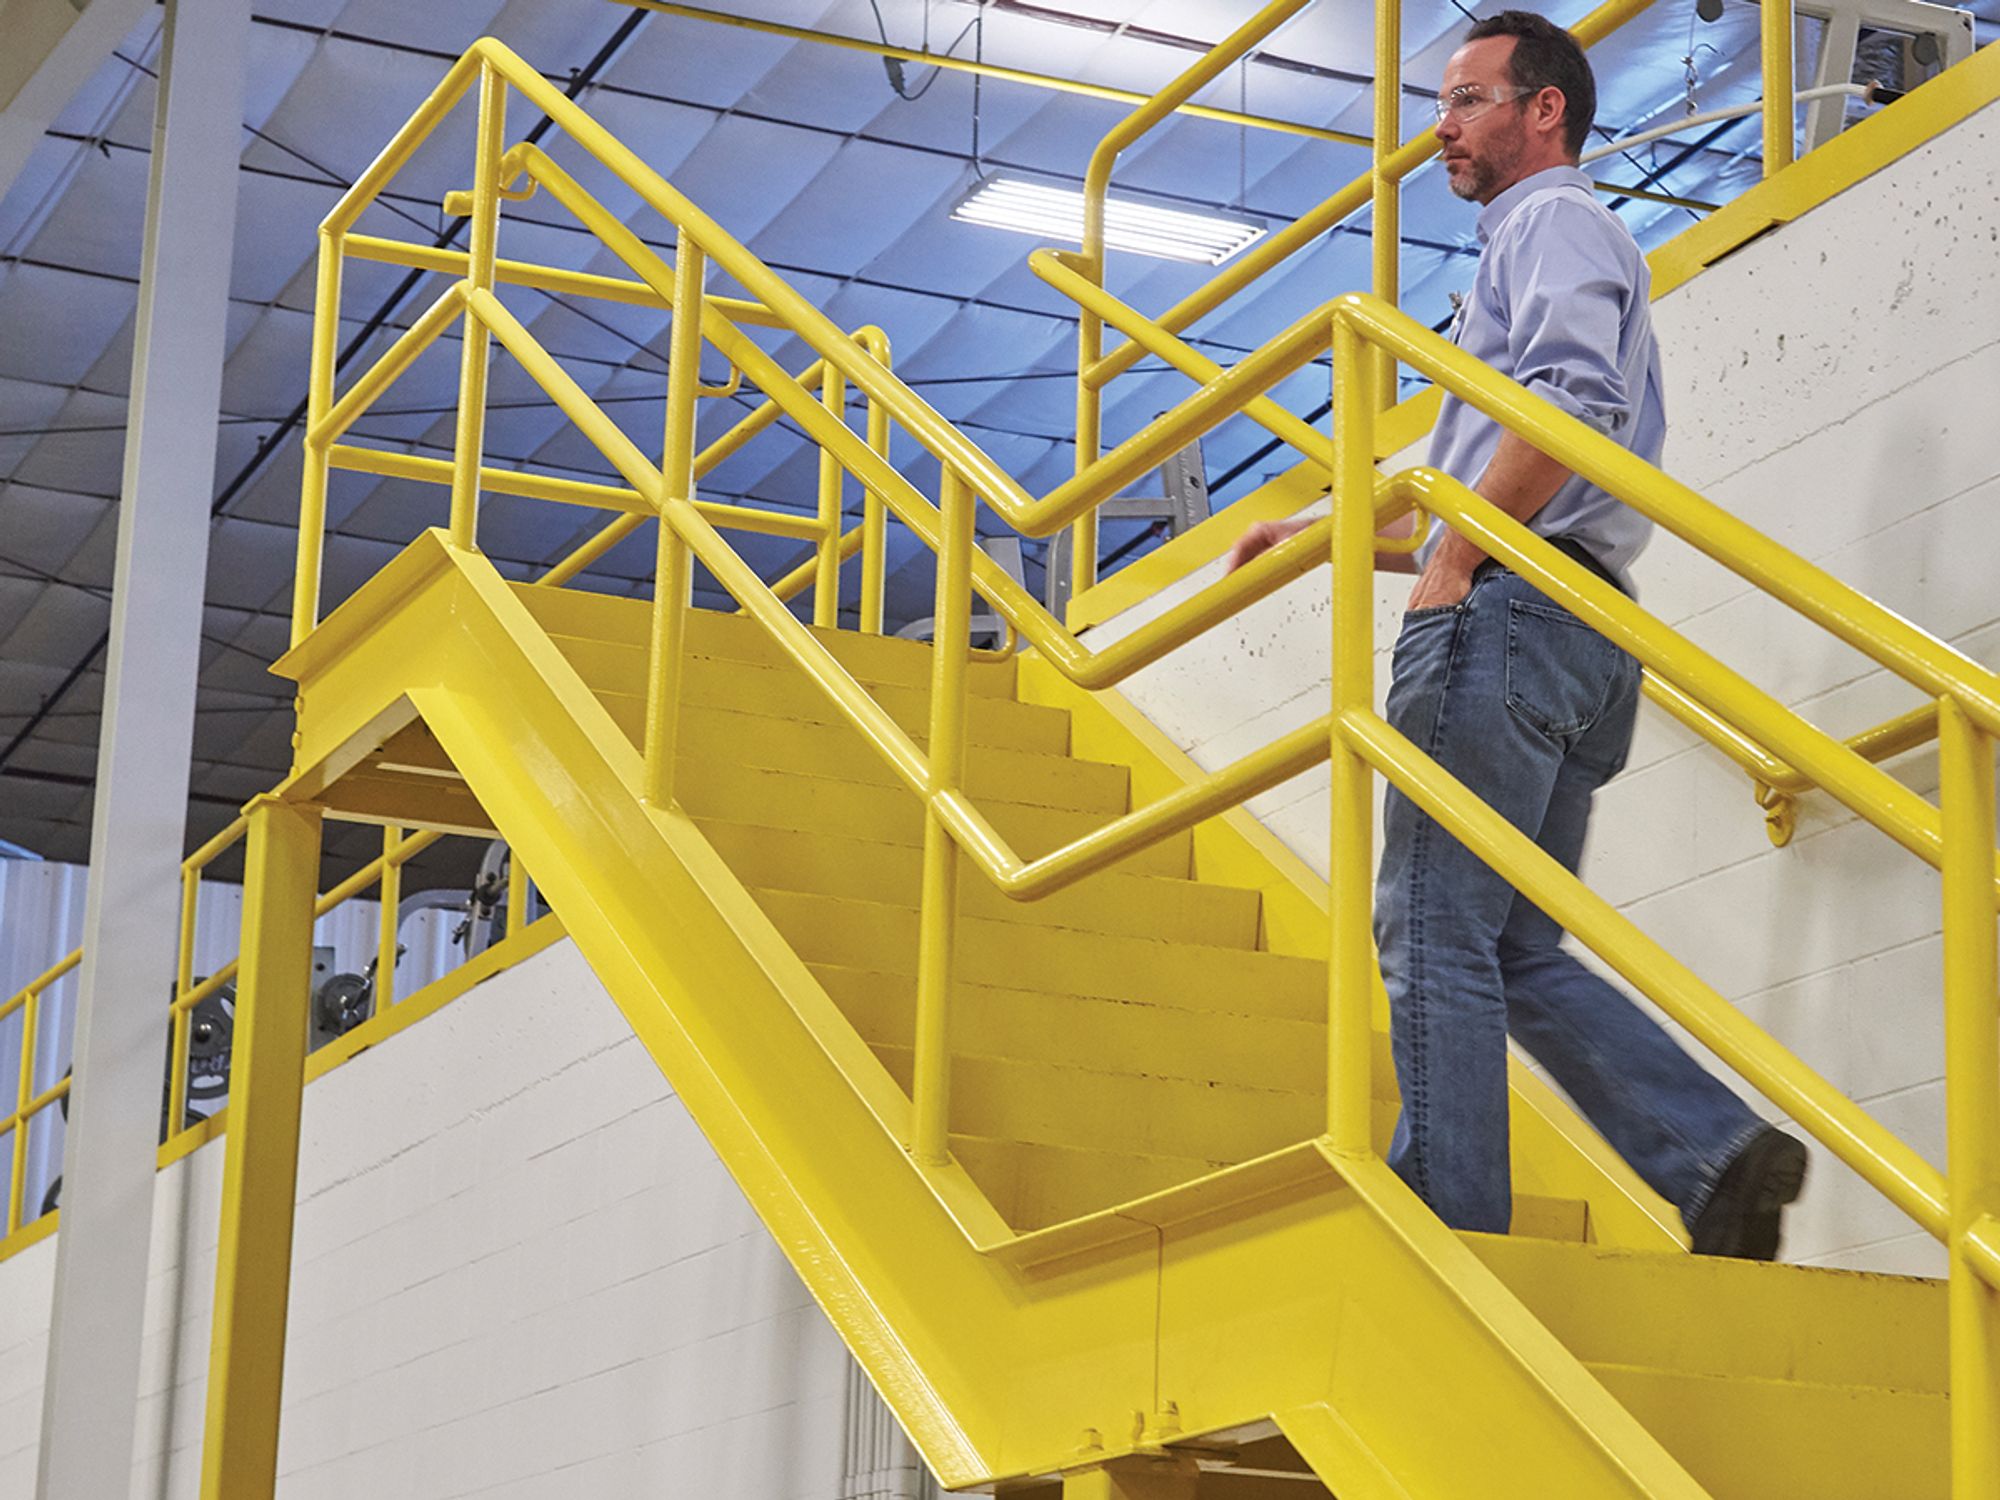 Stairway design requirements